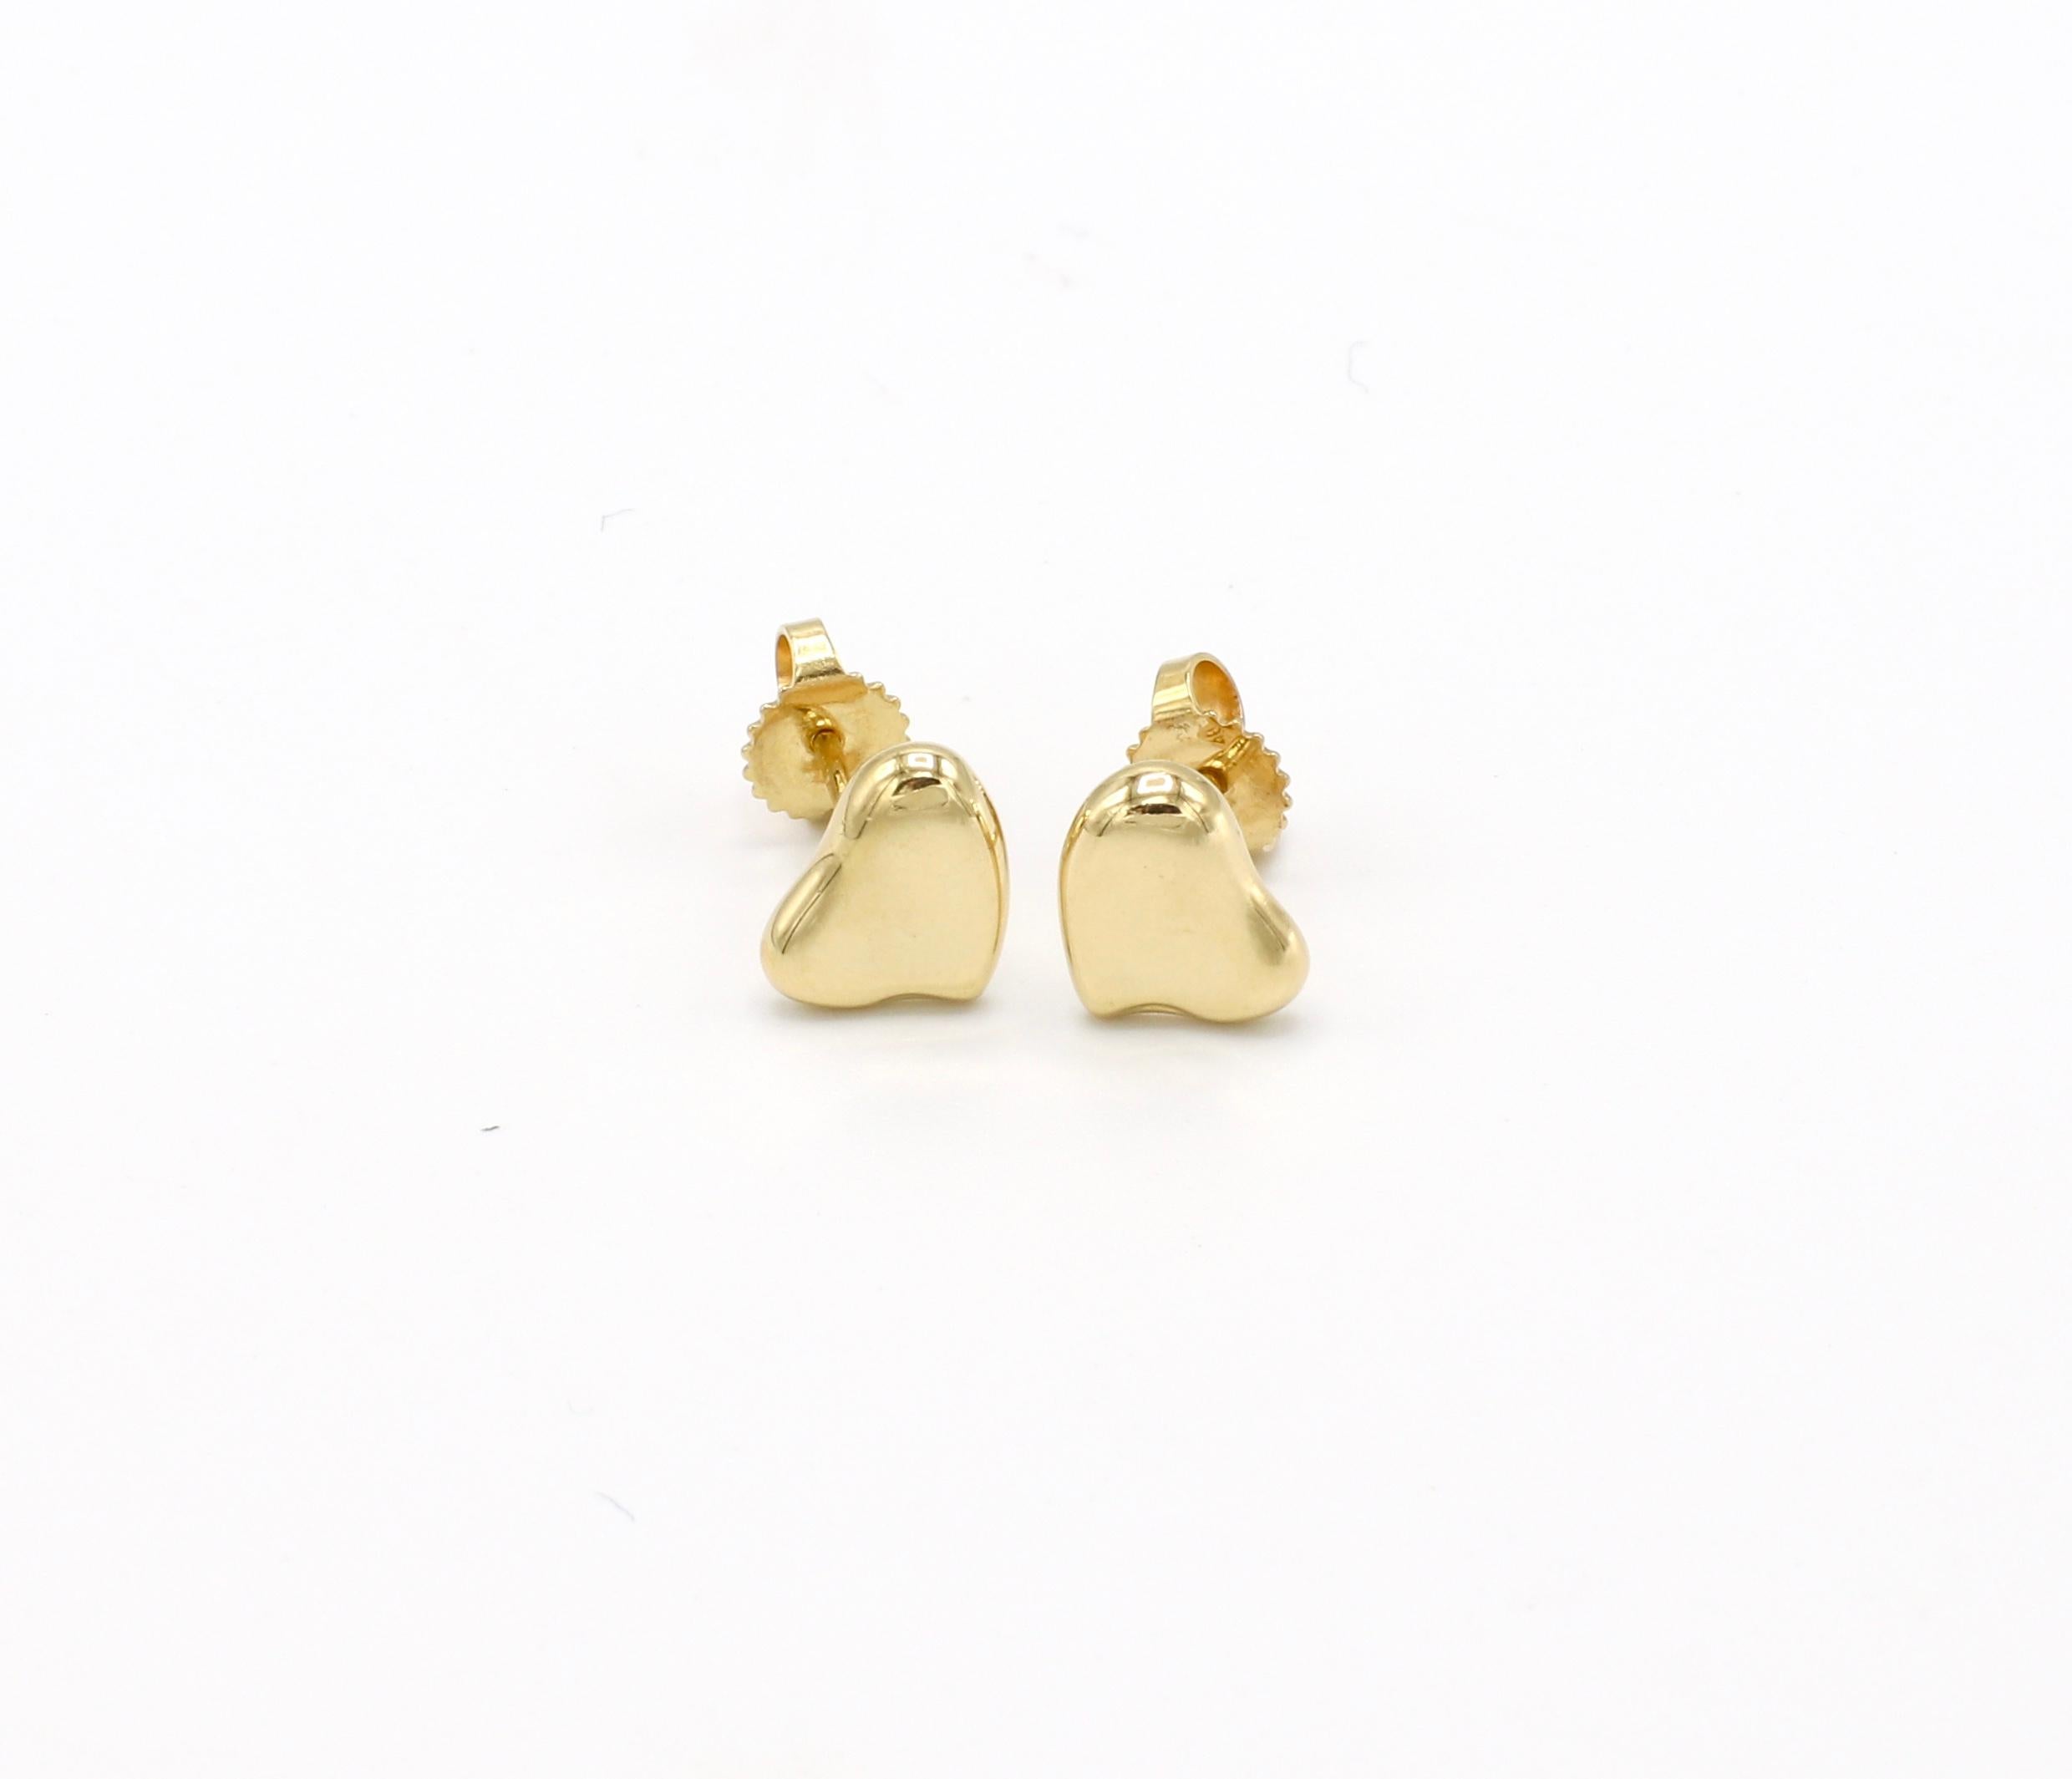 Tiffany & Co. Elsa Peretti Full Heart 18 Karat Gold Stud Earrings with Box 

Metal: 18k gold
Weight: 2.63 grams
Width: 10mm
Signed: T&Co. Peretti 750

Retail:  $1,300
